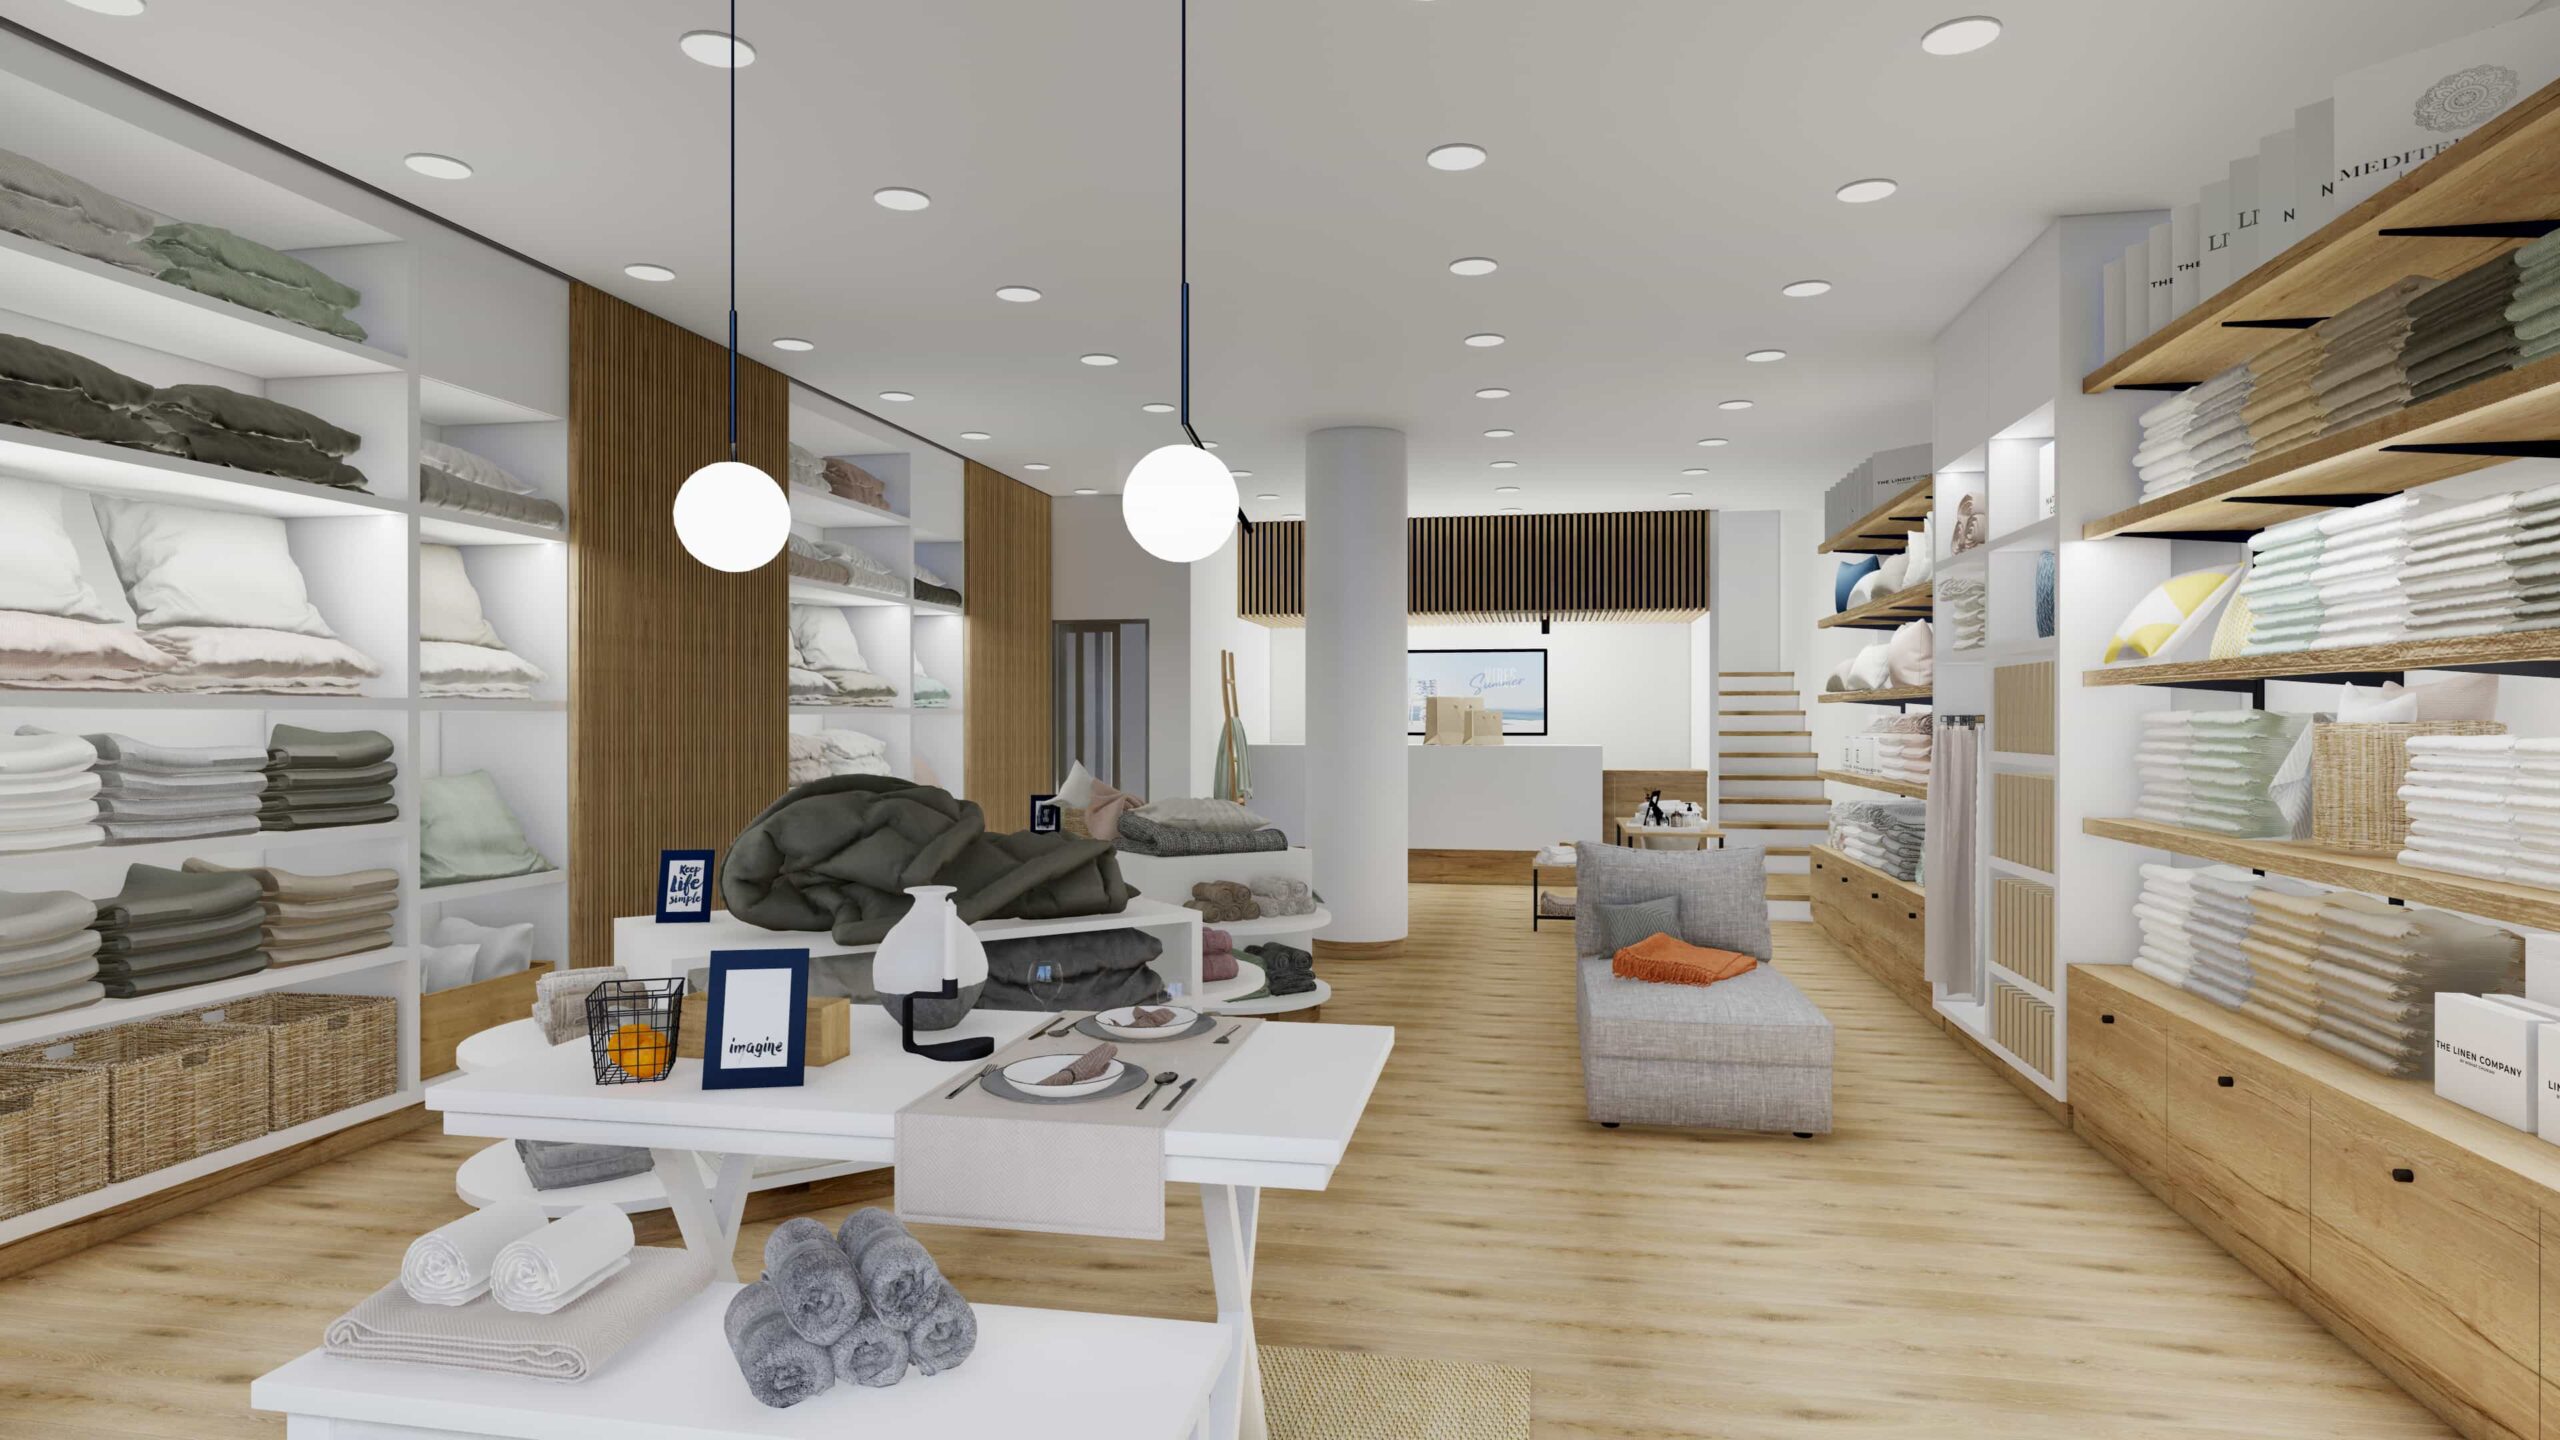 03_polytroponarchitects_Linen_Store_Volos_Interior_Ground_Floor